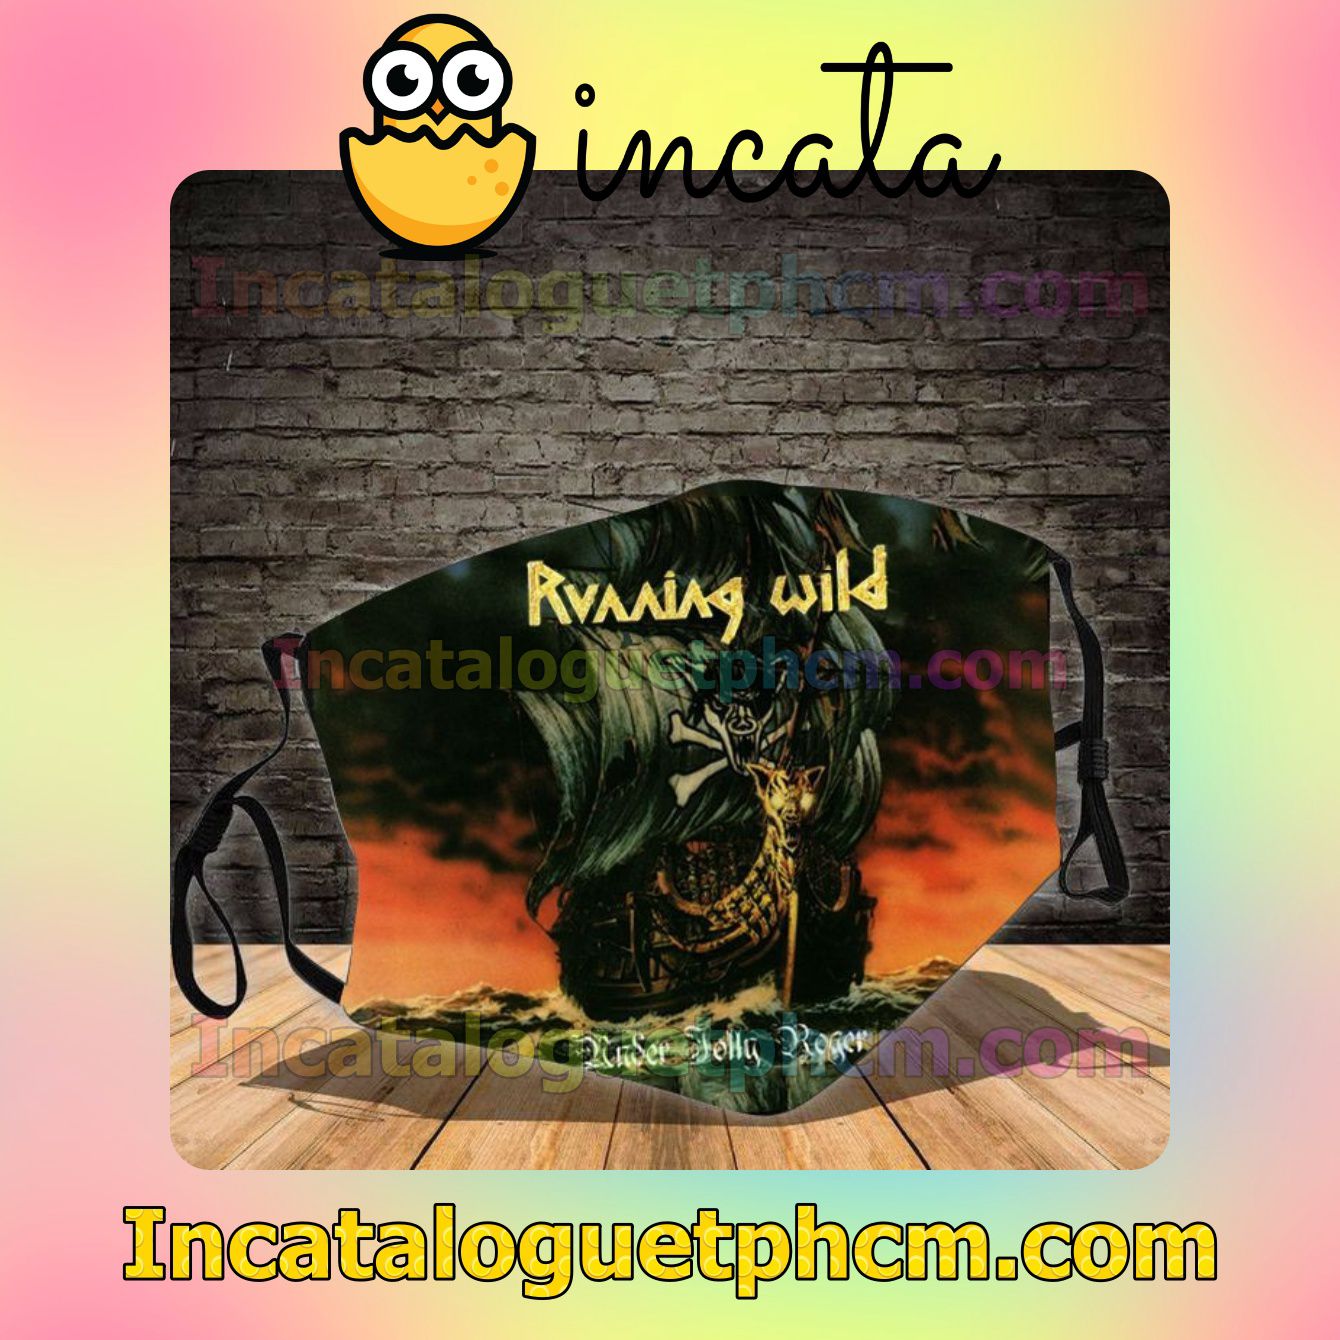 Running Wild Under Jolly Roger Album Cover Cotton Masks